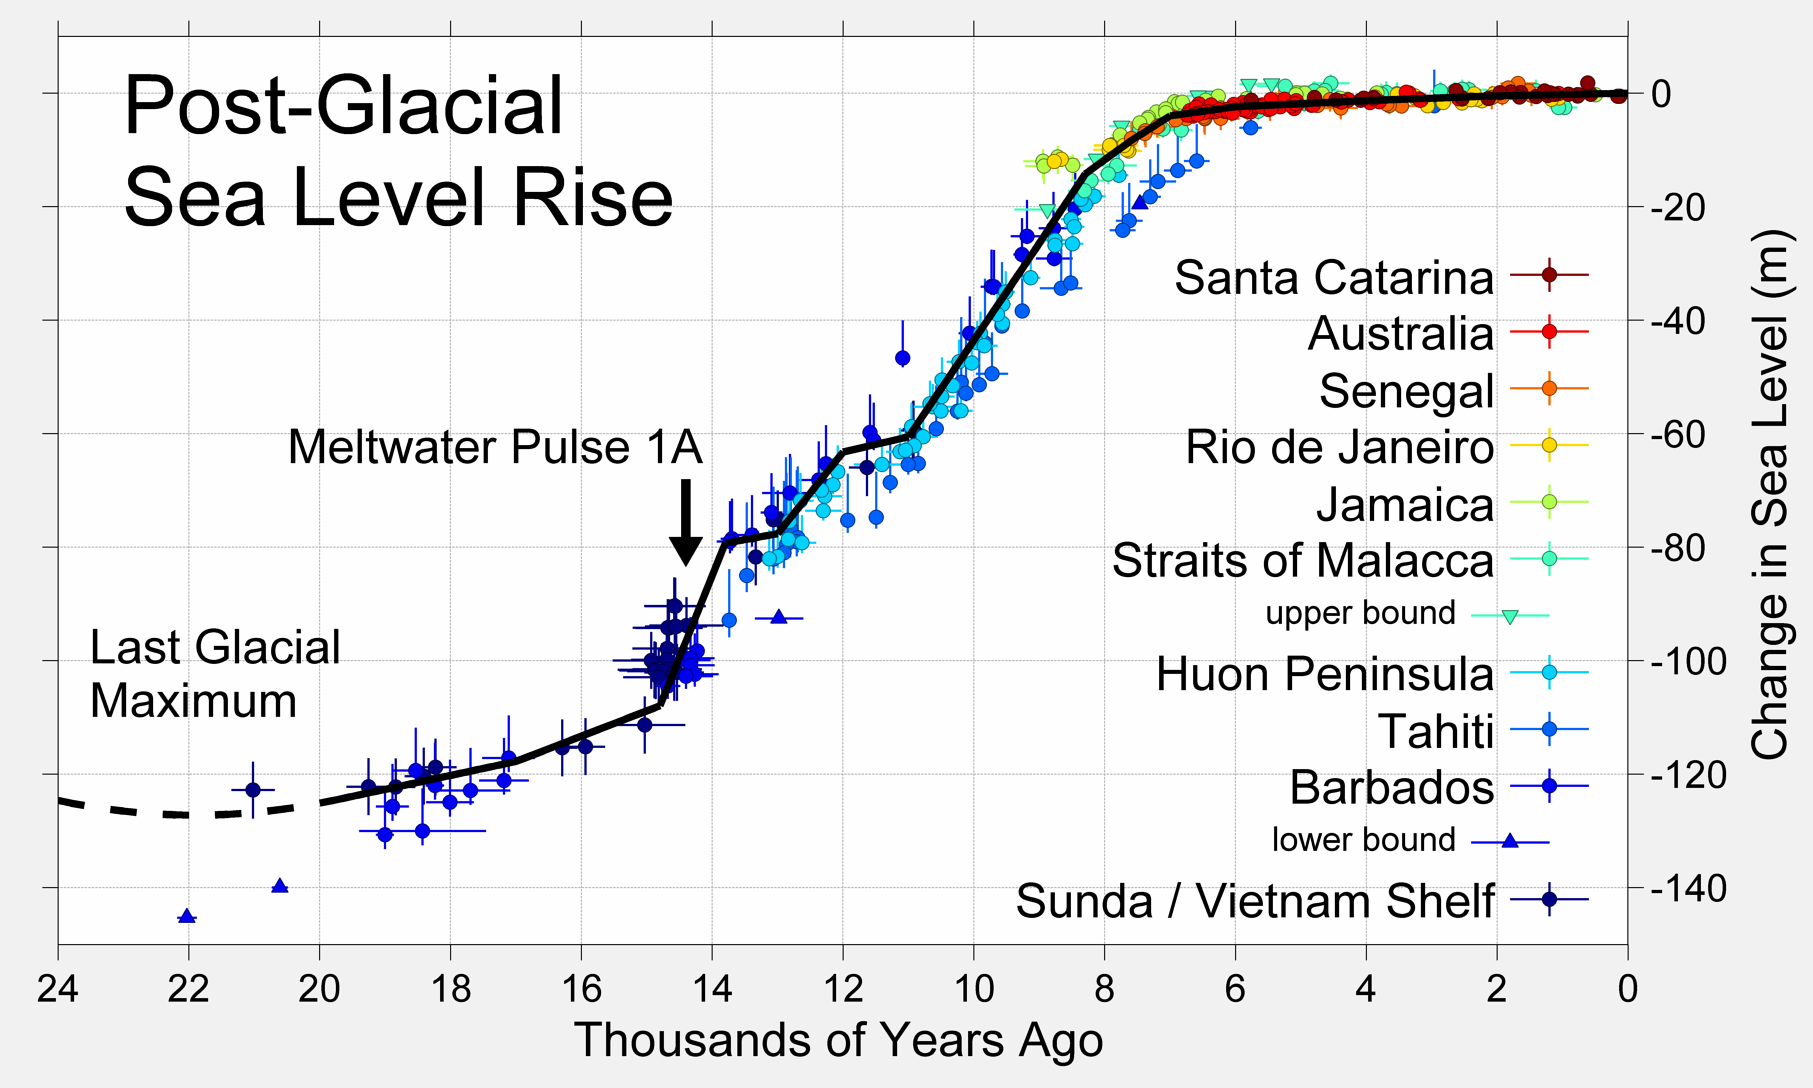 Post-Glacial Sea Level